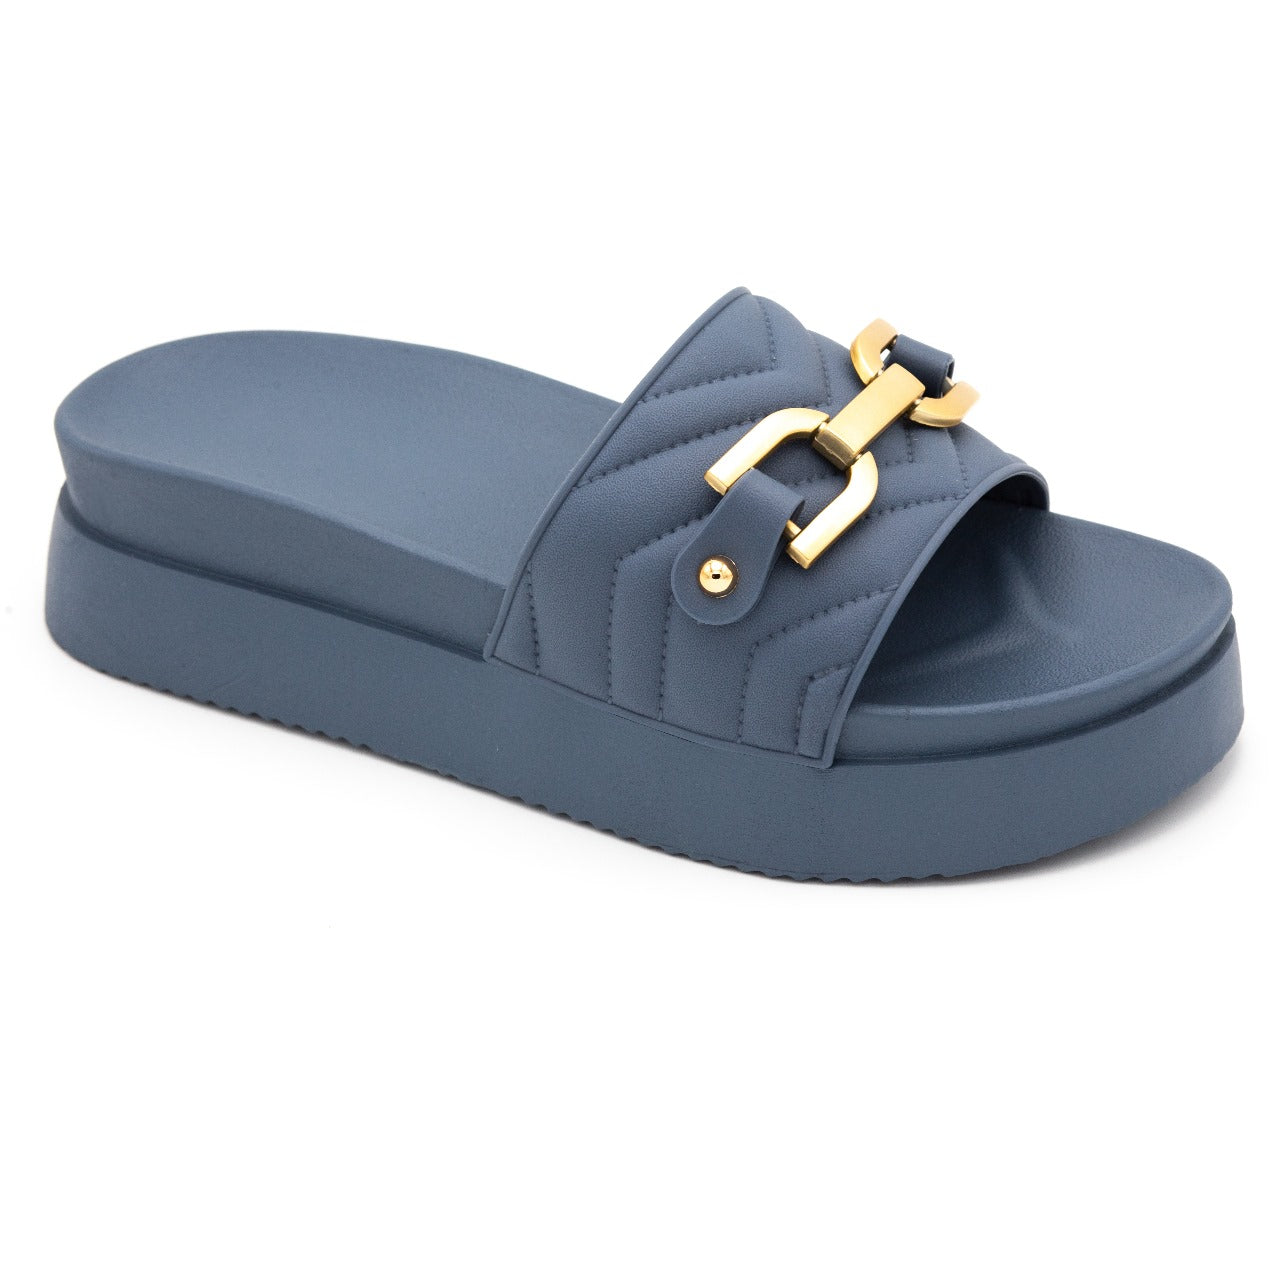 Aneda comfy slipper